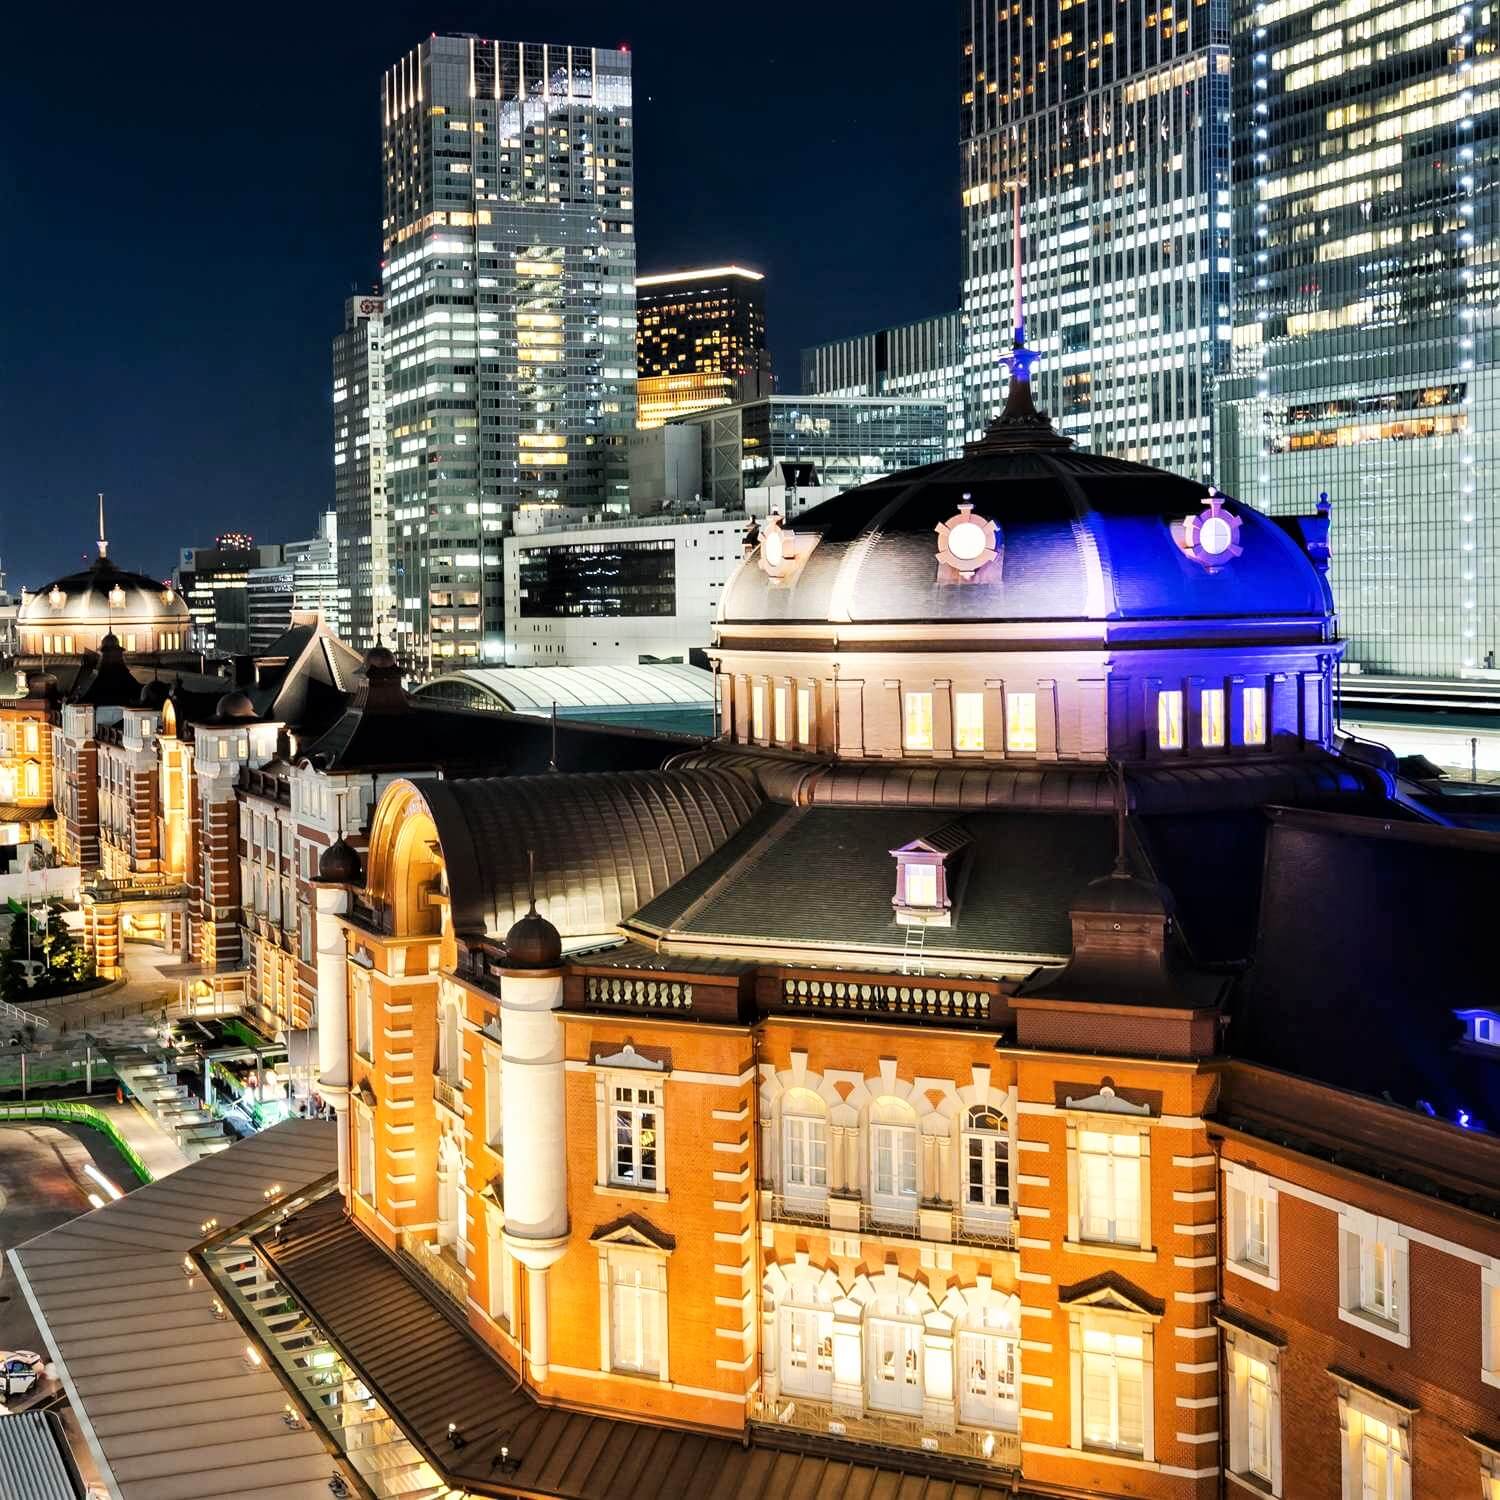 Lighting design in Japan: Tokyo Station = AdobeStock 1